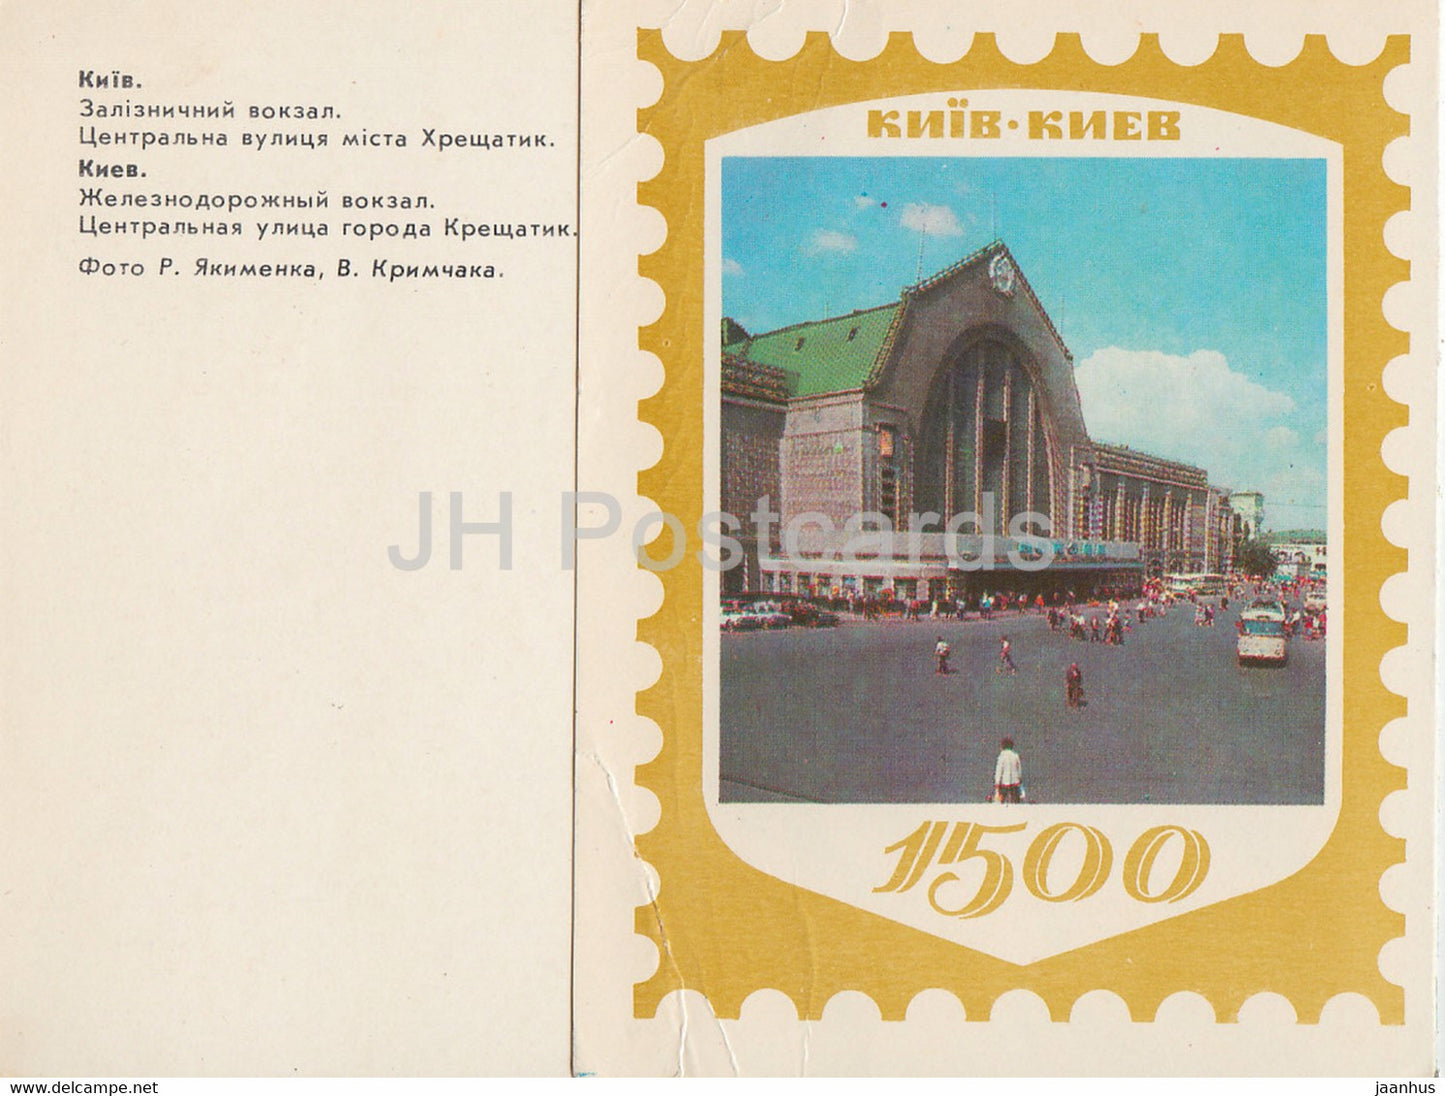 Kiev - Kiev - gare - rue centrale - tramway - Khreshchatyk - 1983 - Ukraine URSS - utilisé